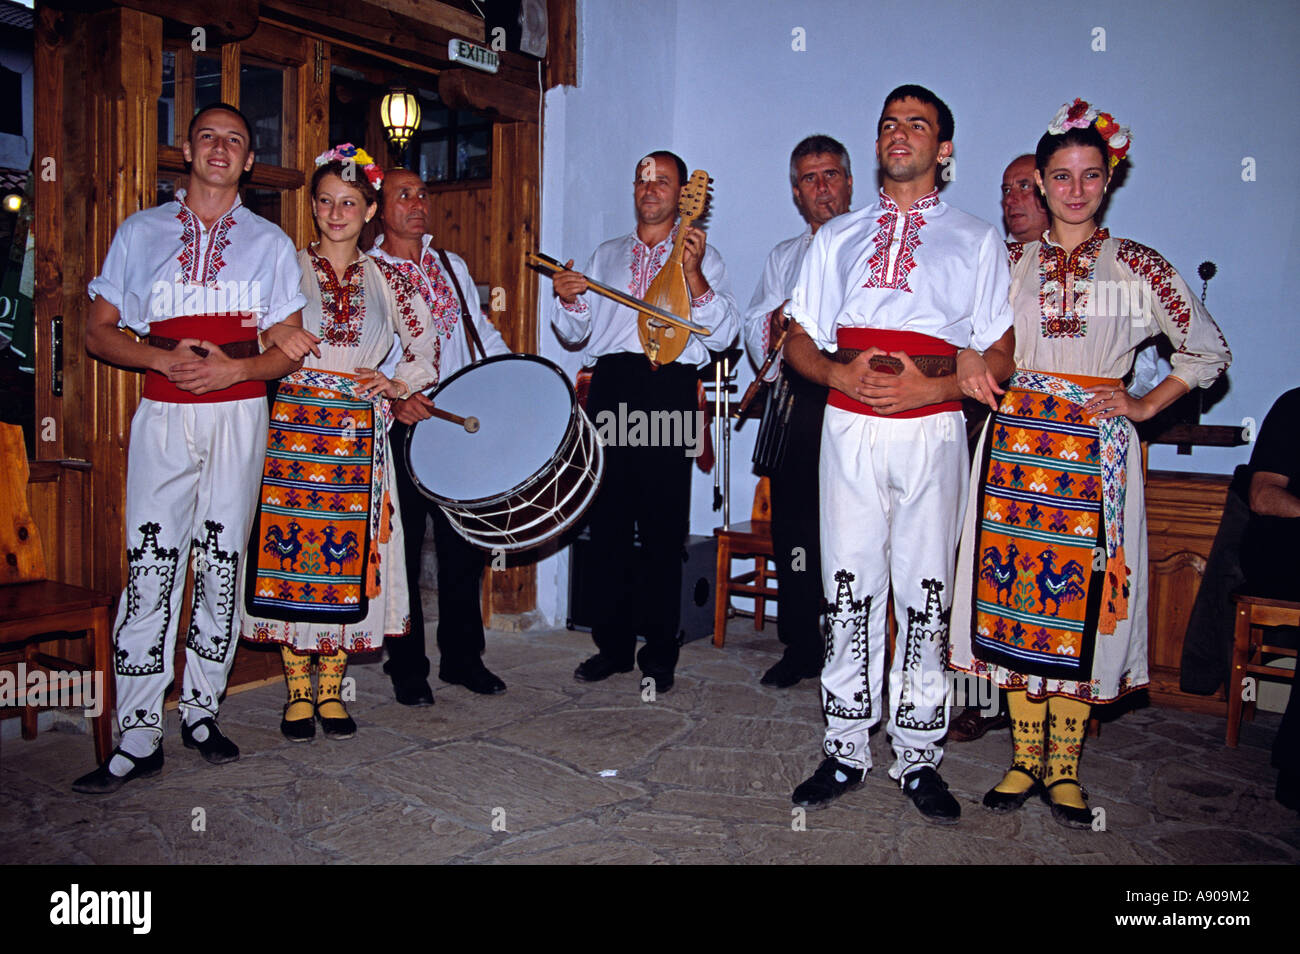 Dancers and musicians in national costume, Arbanassi, Bulgaria Stock Photo